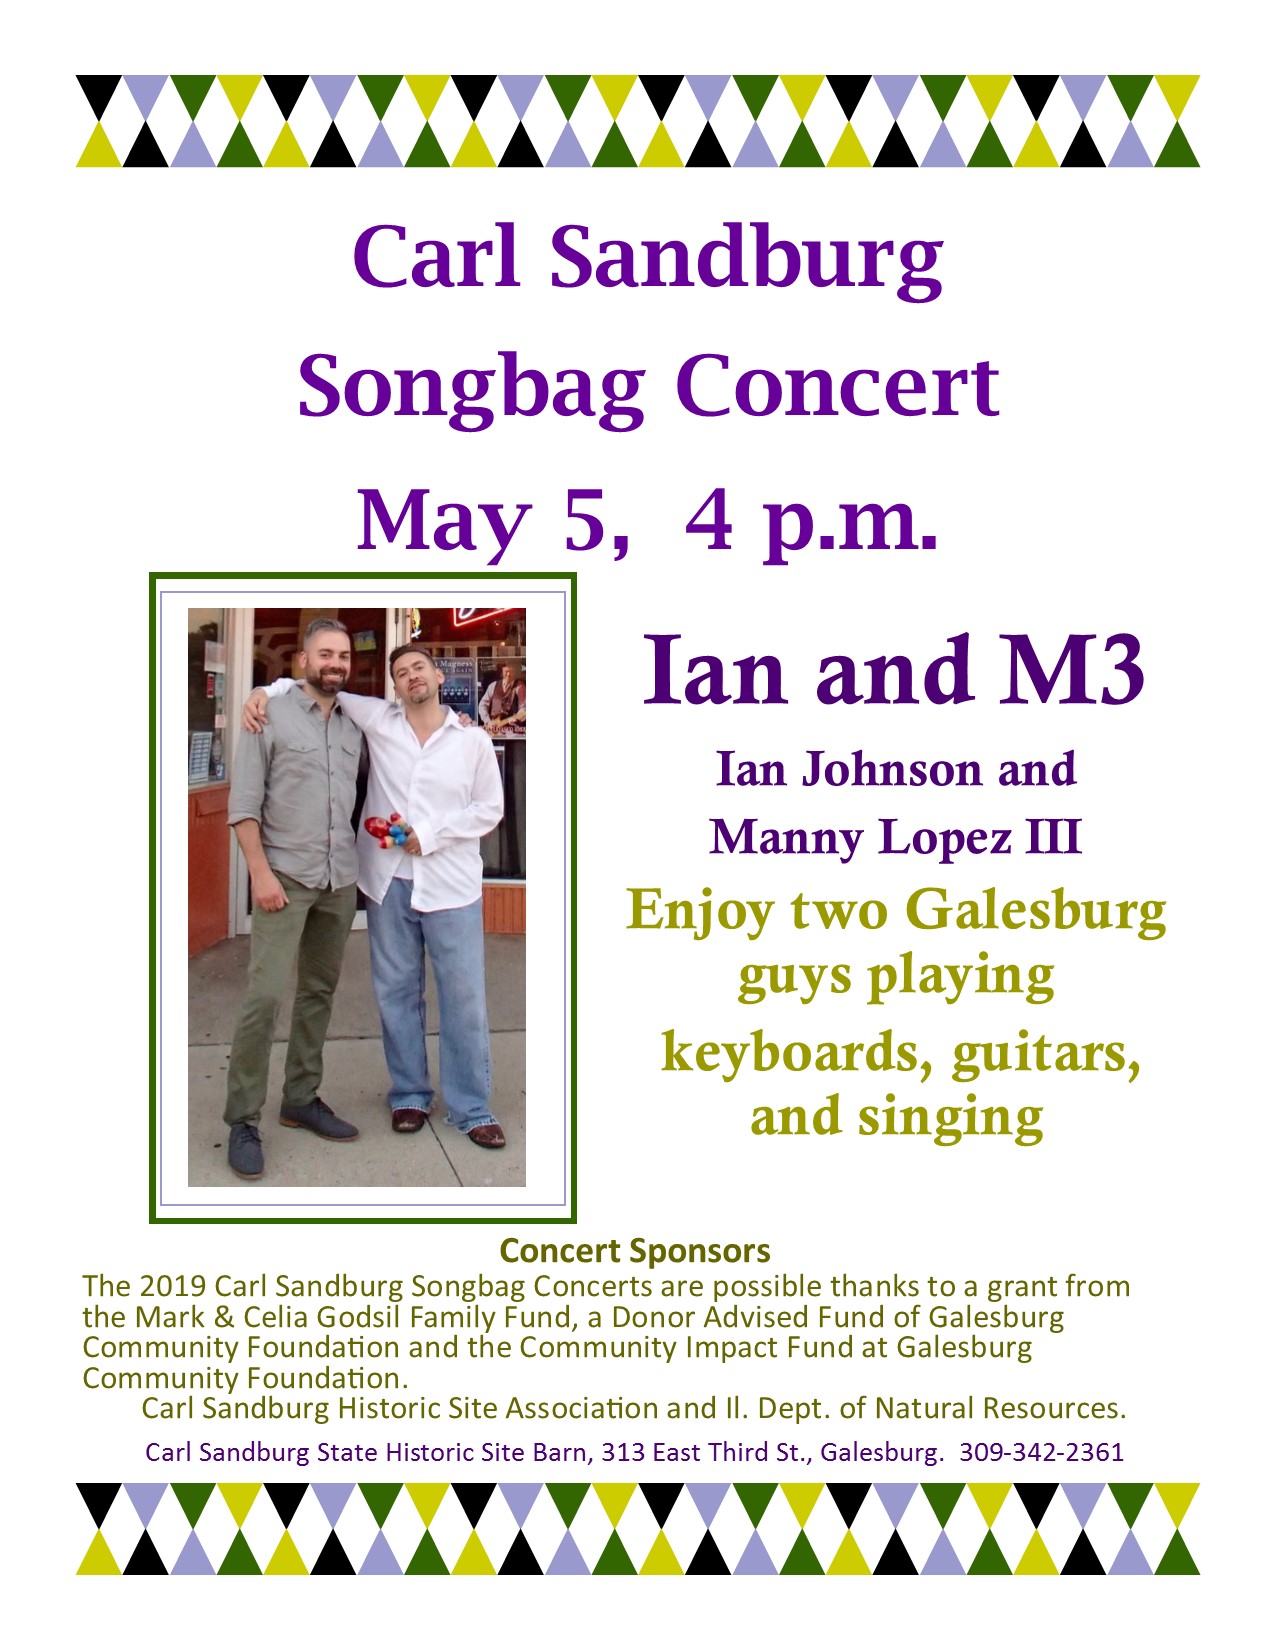 Sandburg Songbag - May 5, 2019 - 4-6pm / Ian Johnson & Manny Lopez III